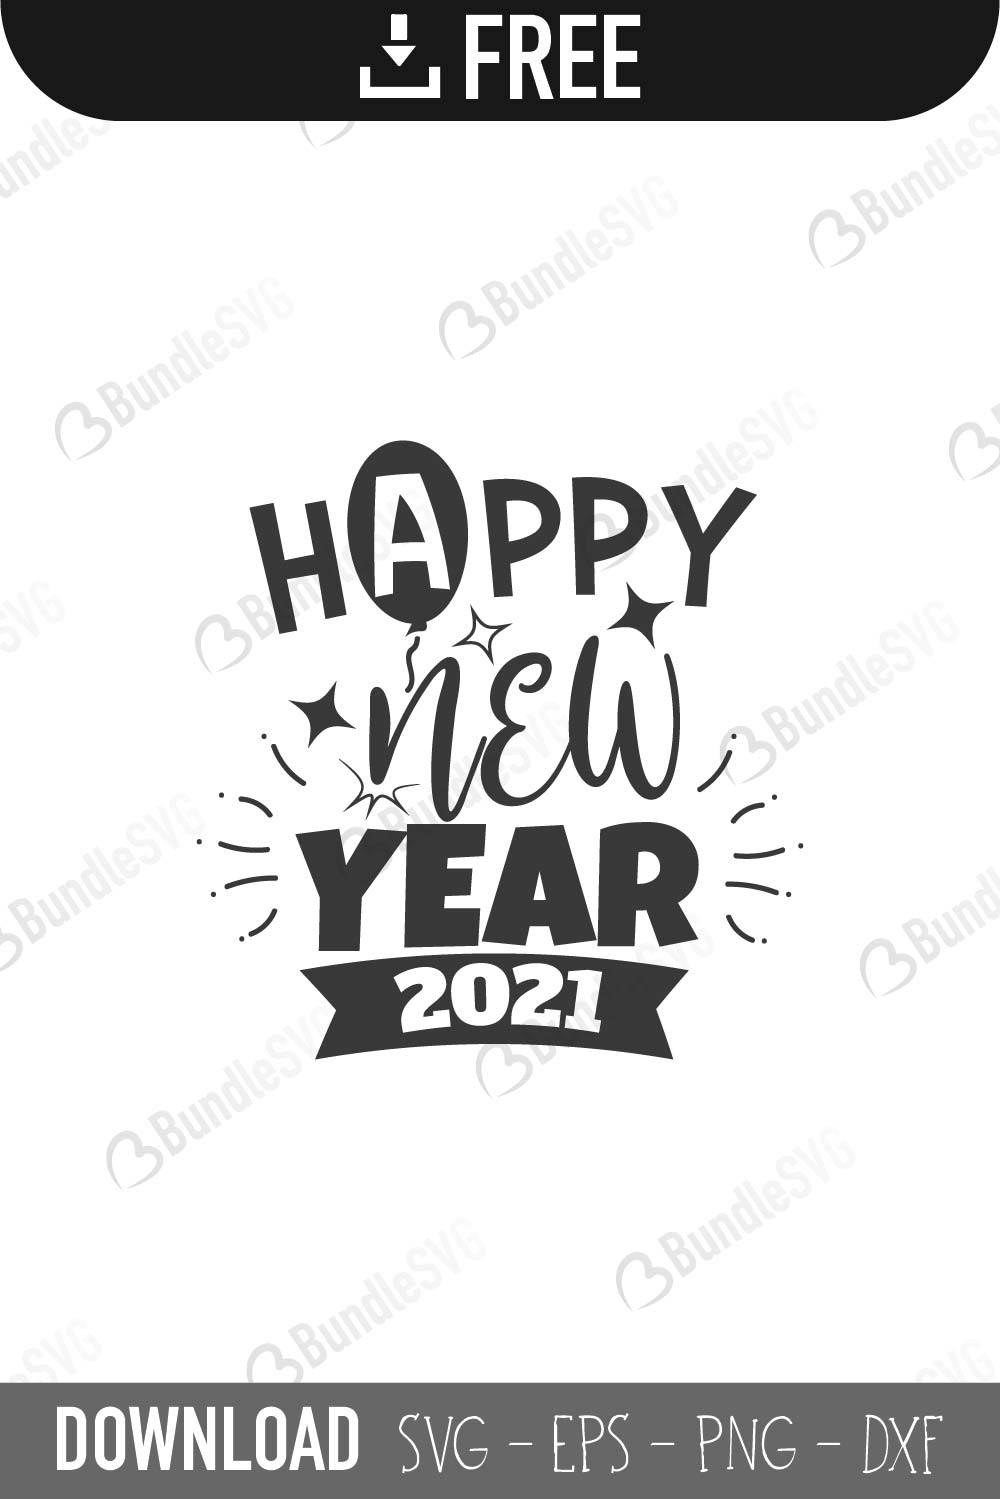 Download Happy New Year 2021 Svg Cut Files Free Download Bundlesvg